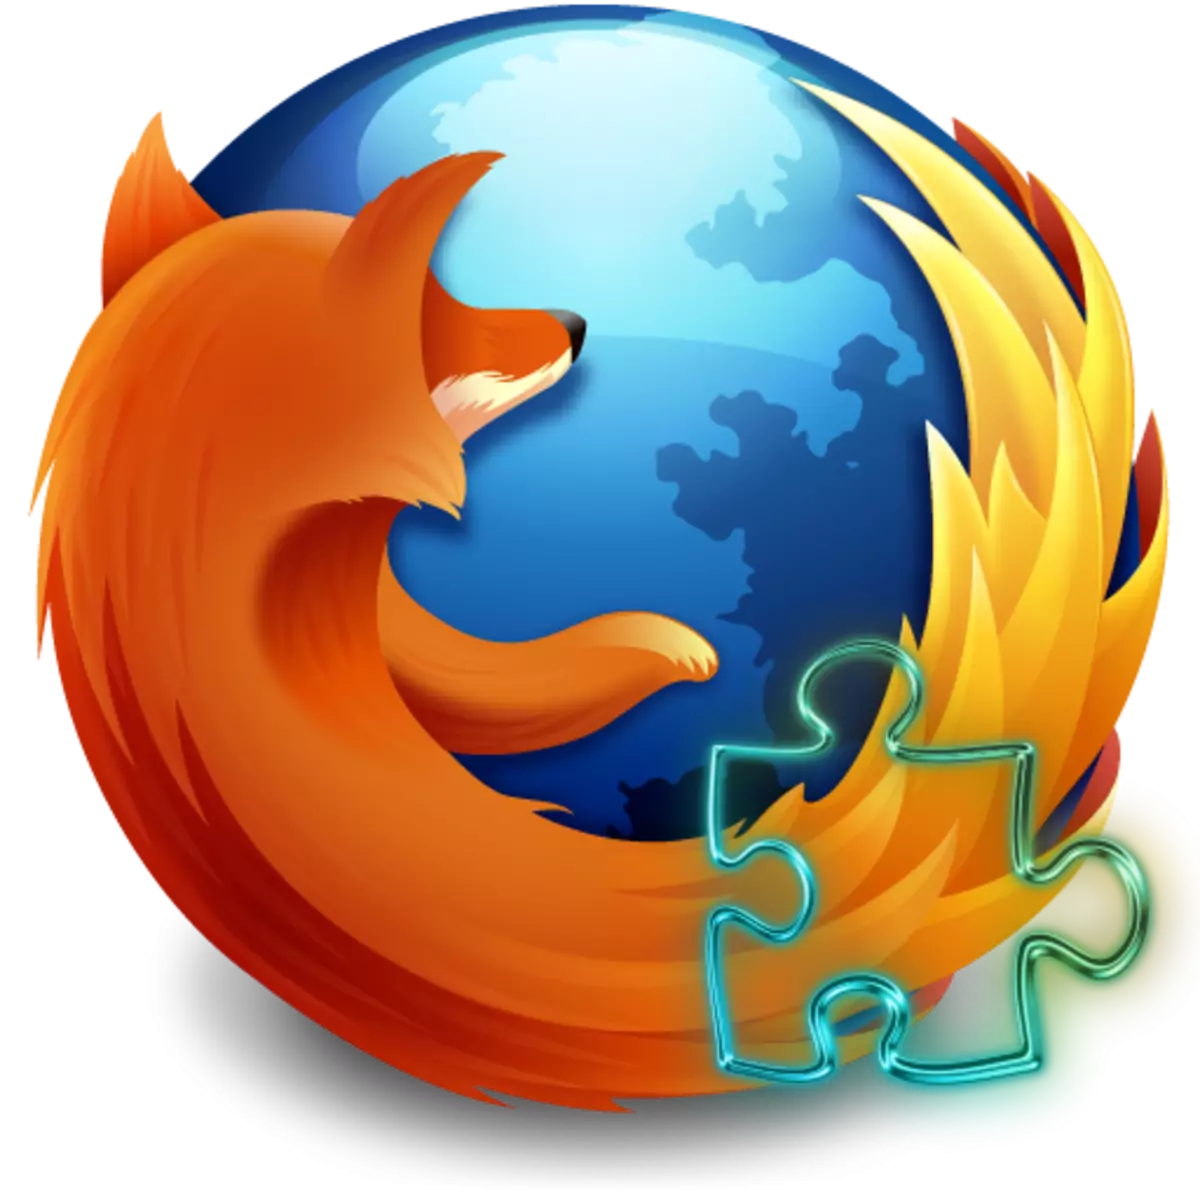 Ellenőrizze a Plugins-t a Mozilla Firefoxban